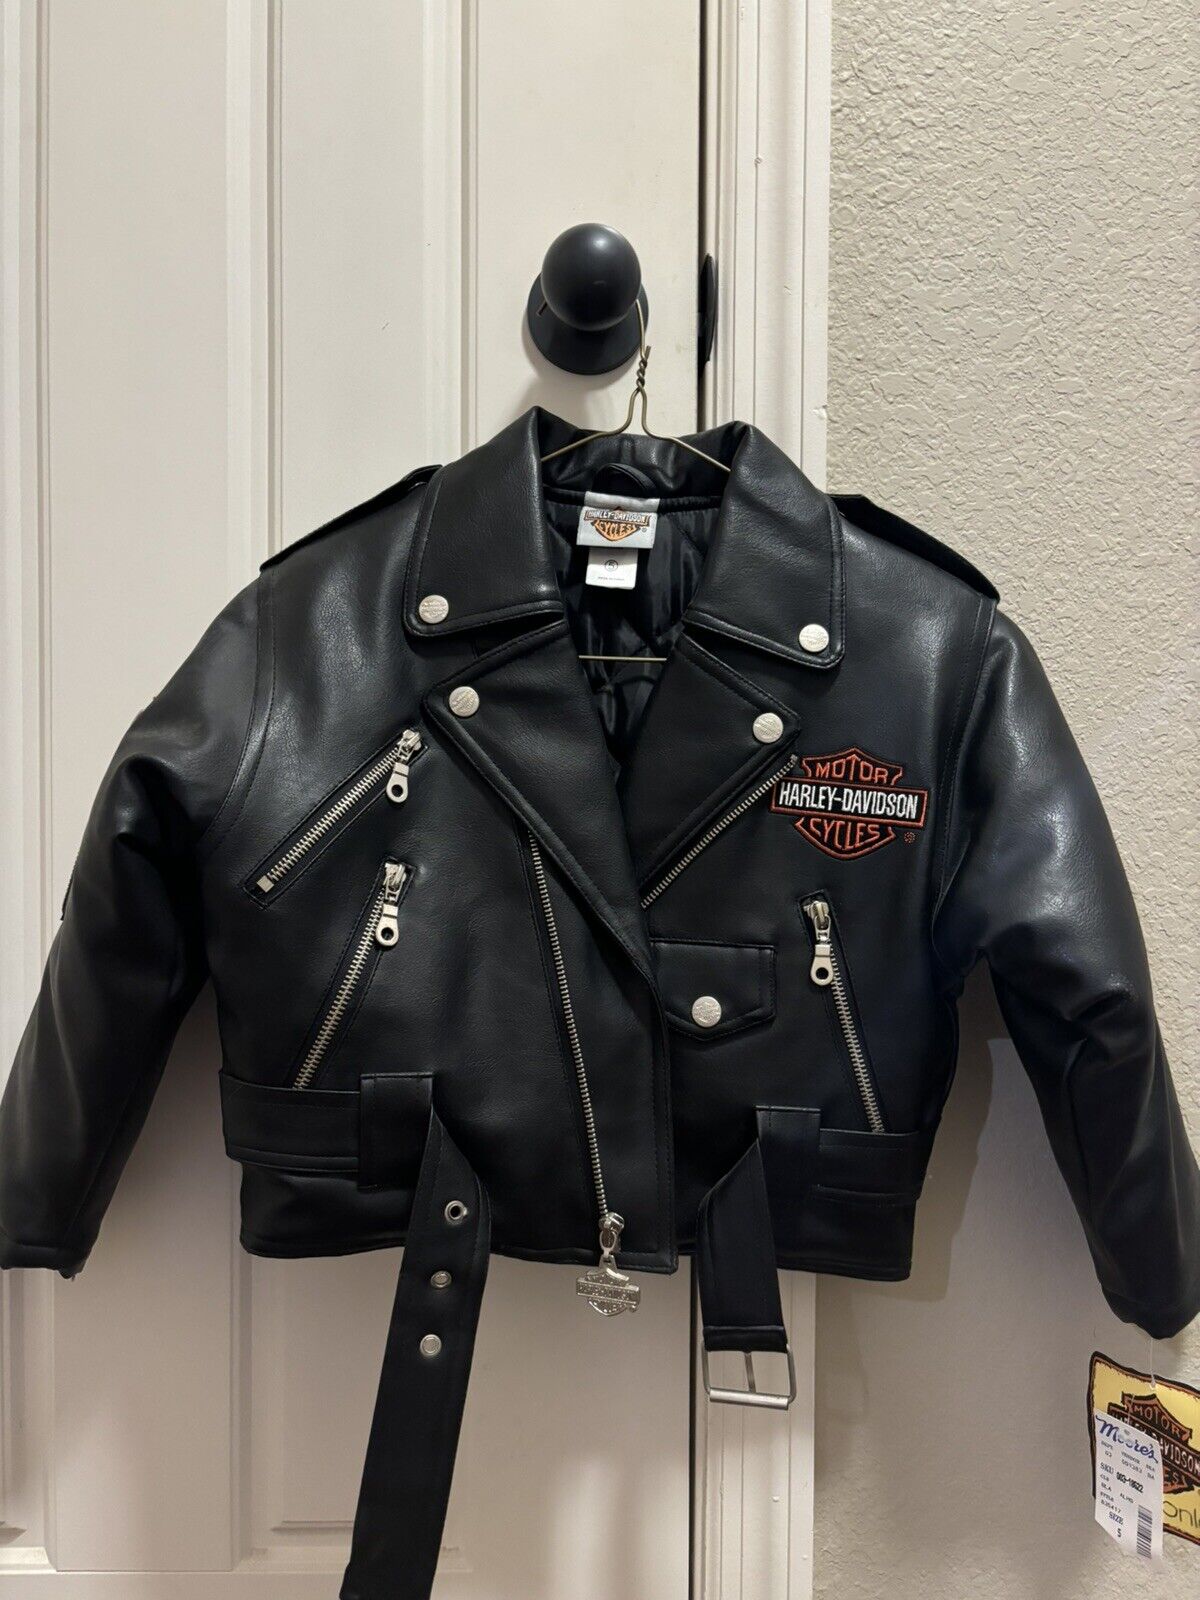 Harley Davidson Youth Motorcycle Jacket Black Born to Ride Series Zip Size 5